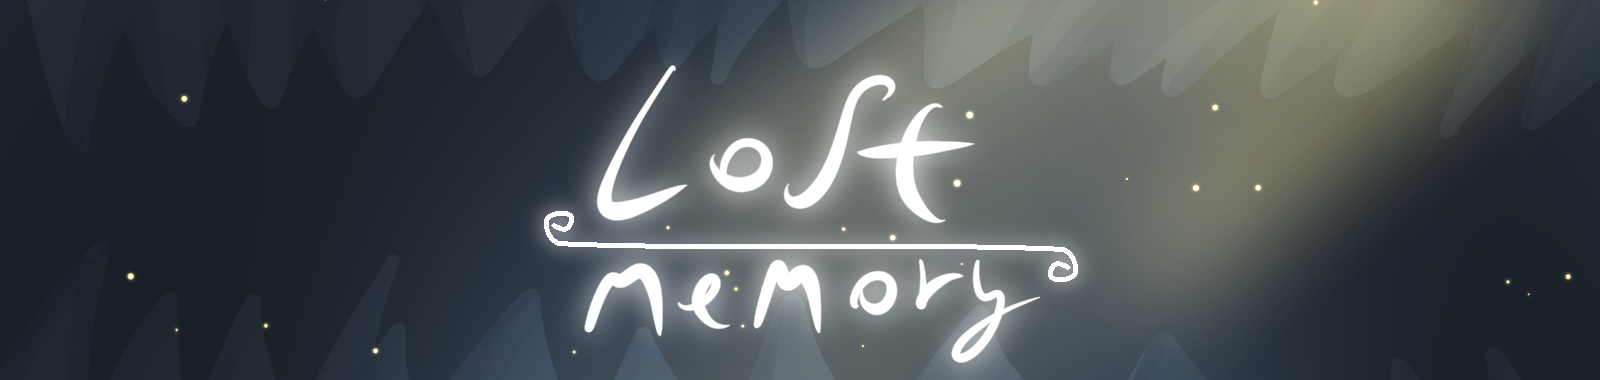 Lost Memory Demo